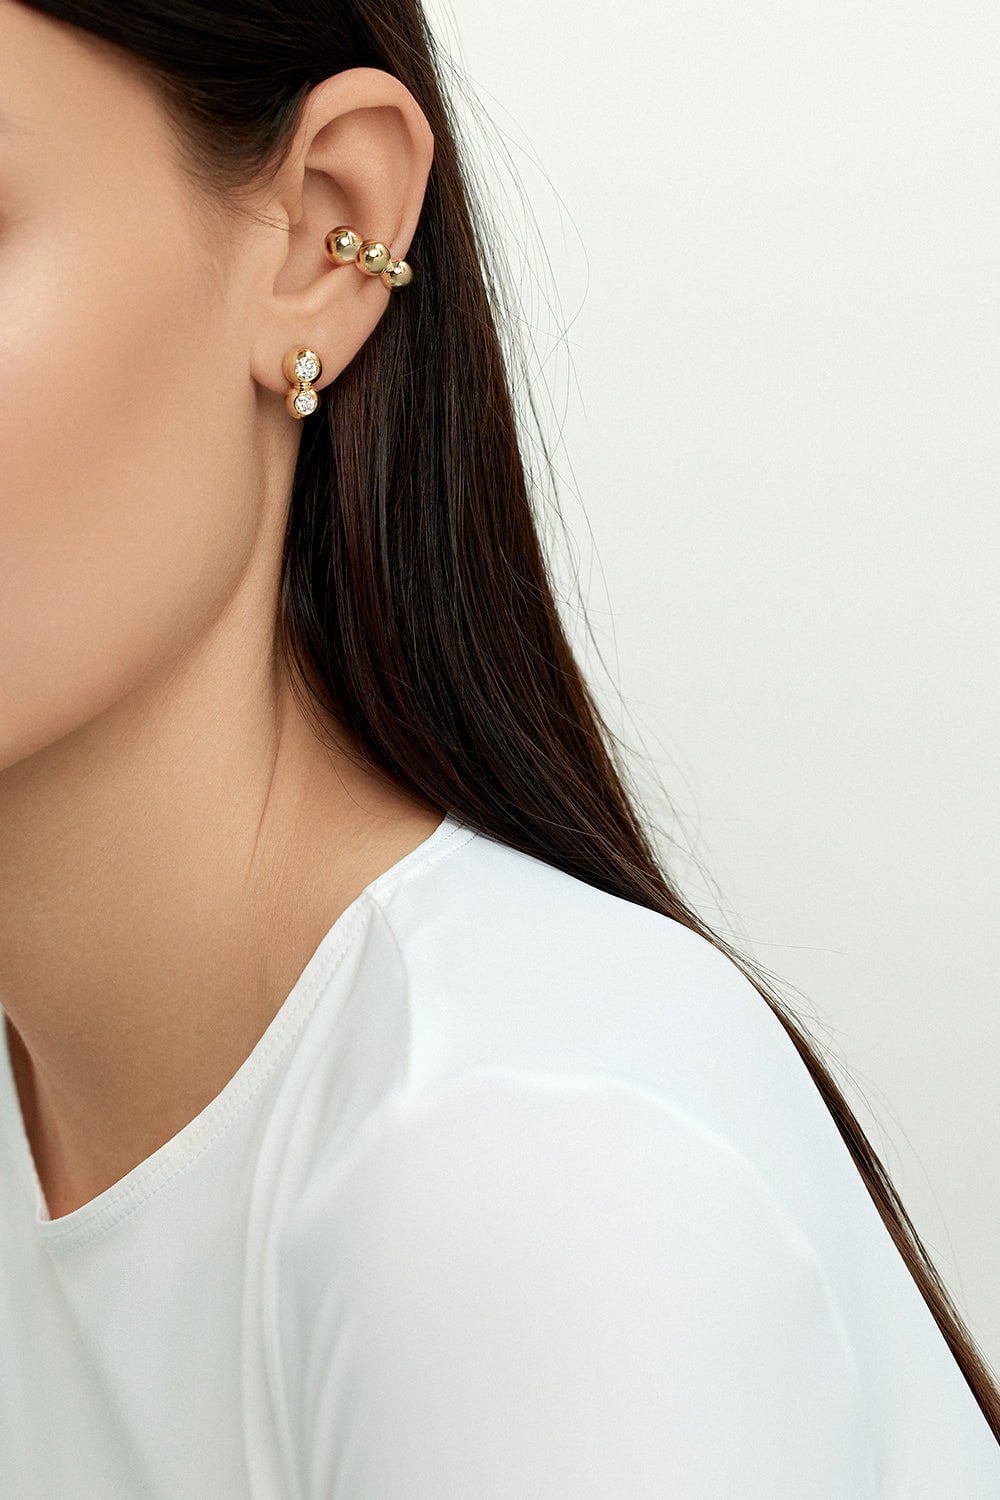 MELISSA KAYE-Large Audrey Double Stud Earrings-YELLOW GOLD